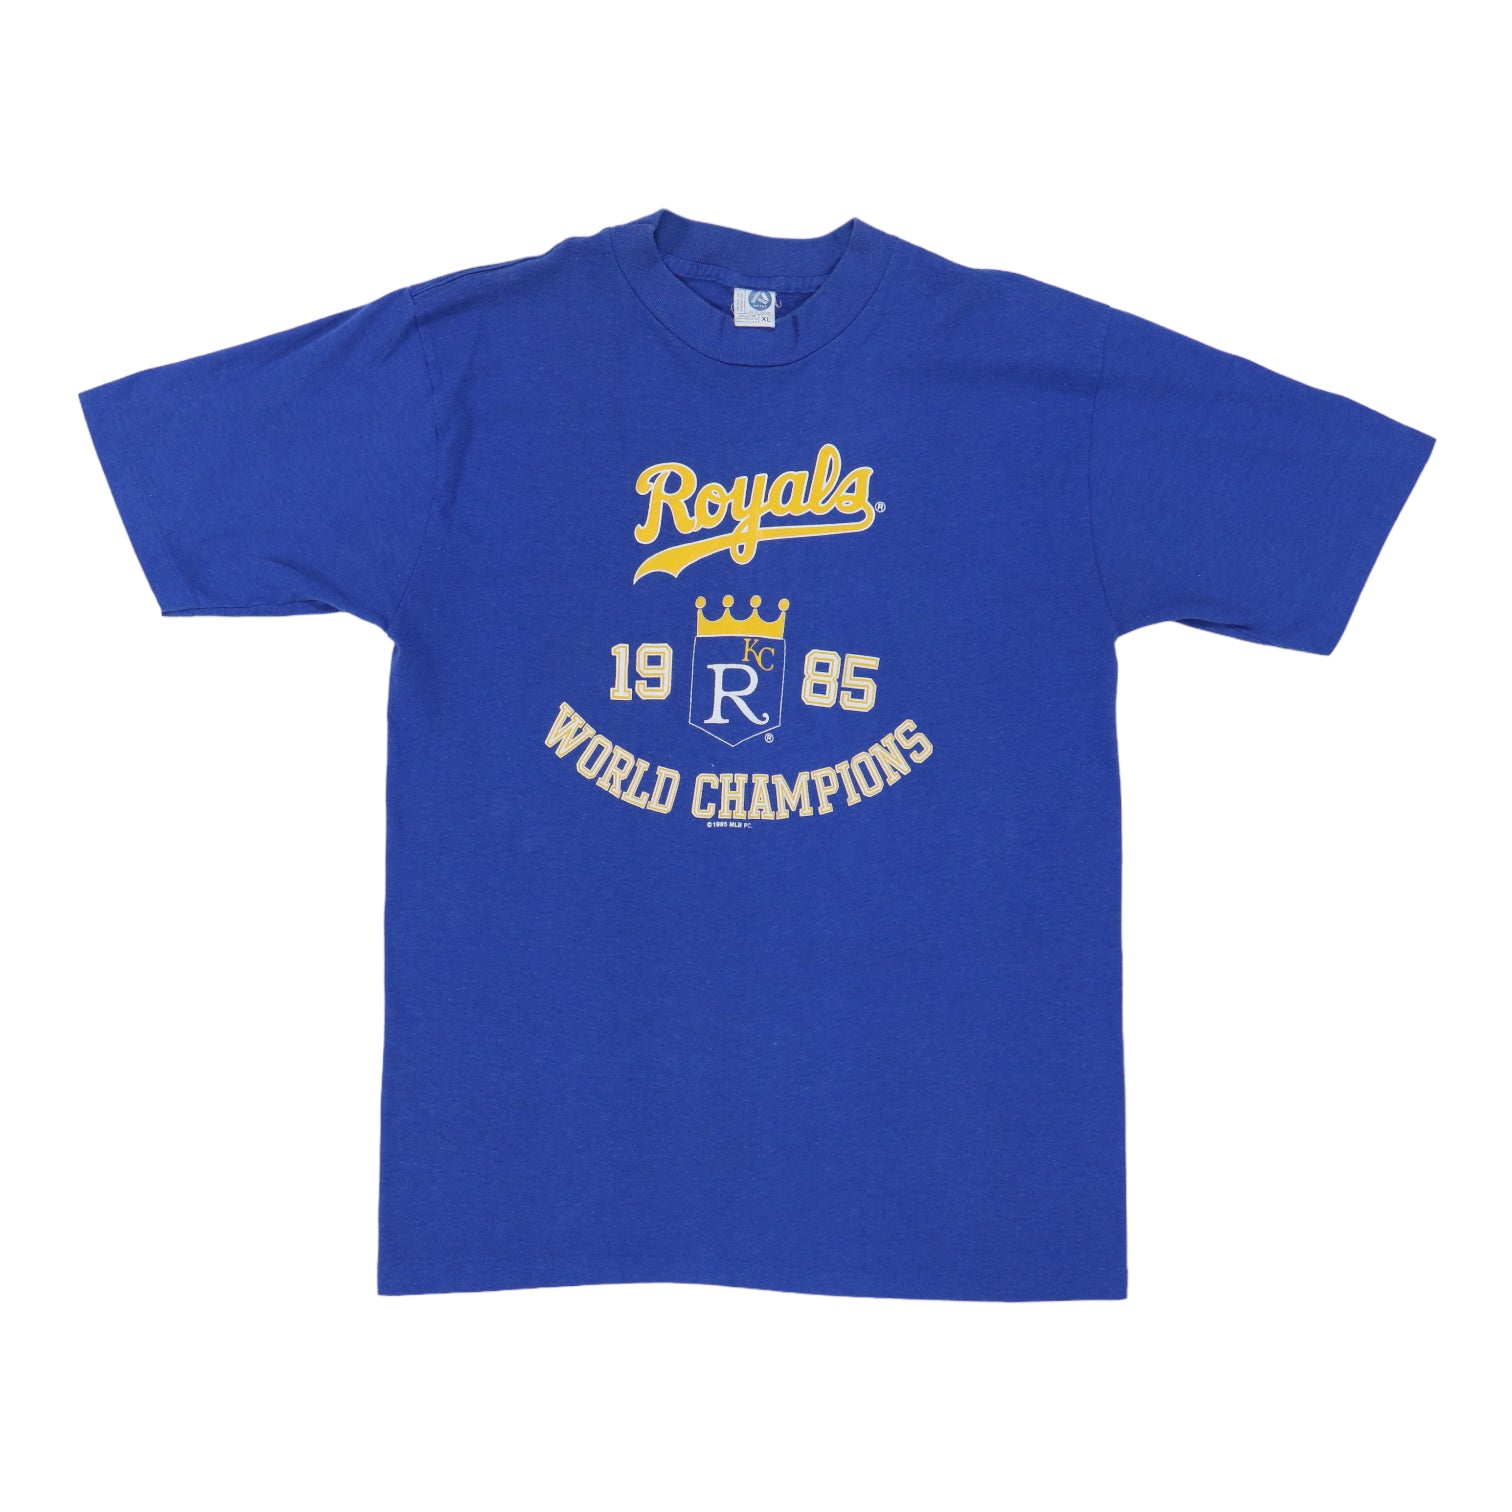 Vintage Kansas City Royals 1985 World Champions Shirt Size 